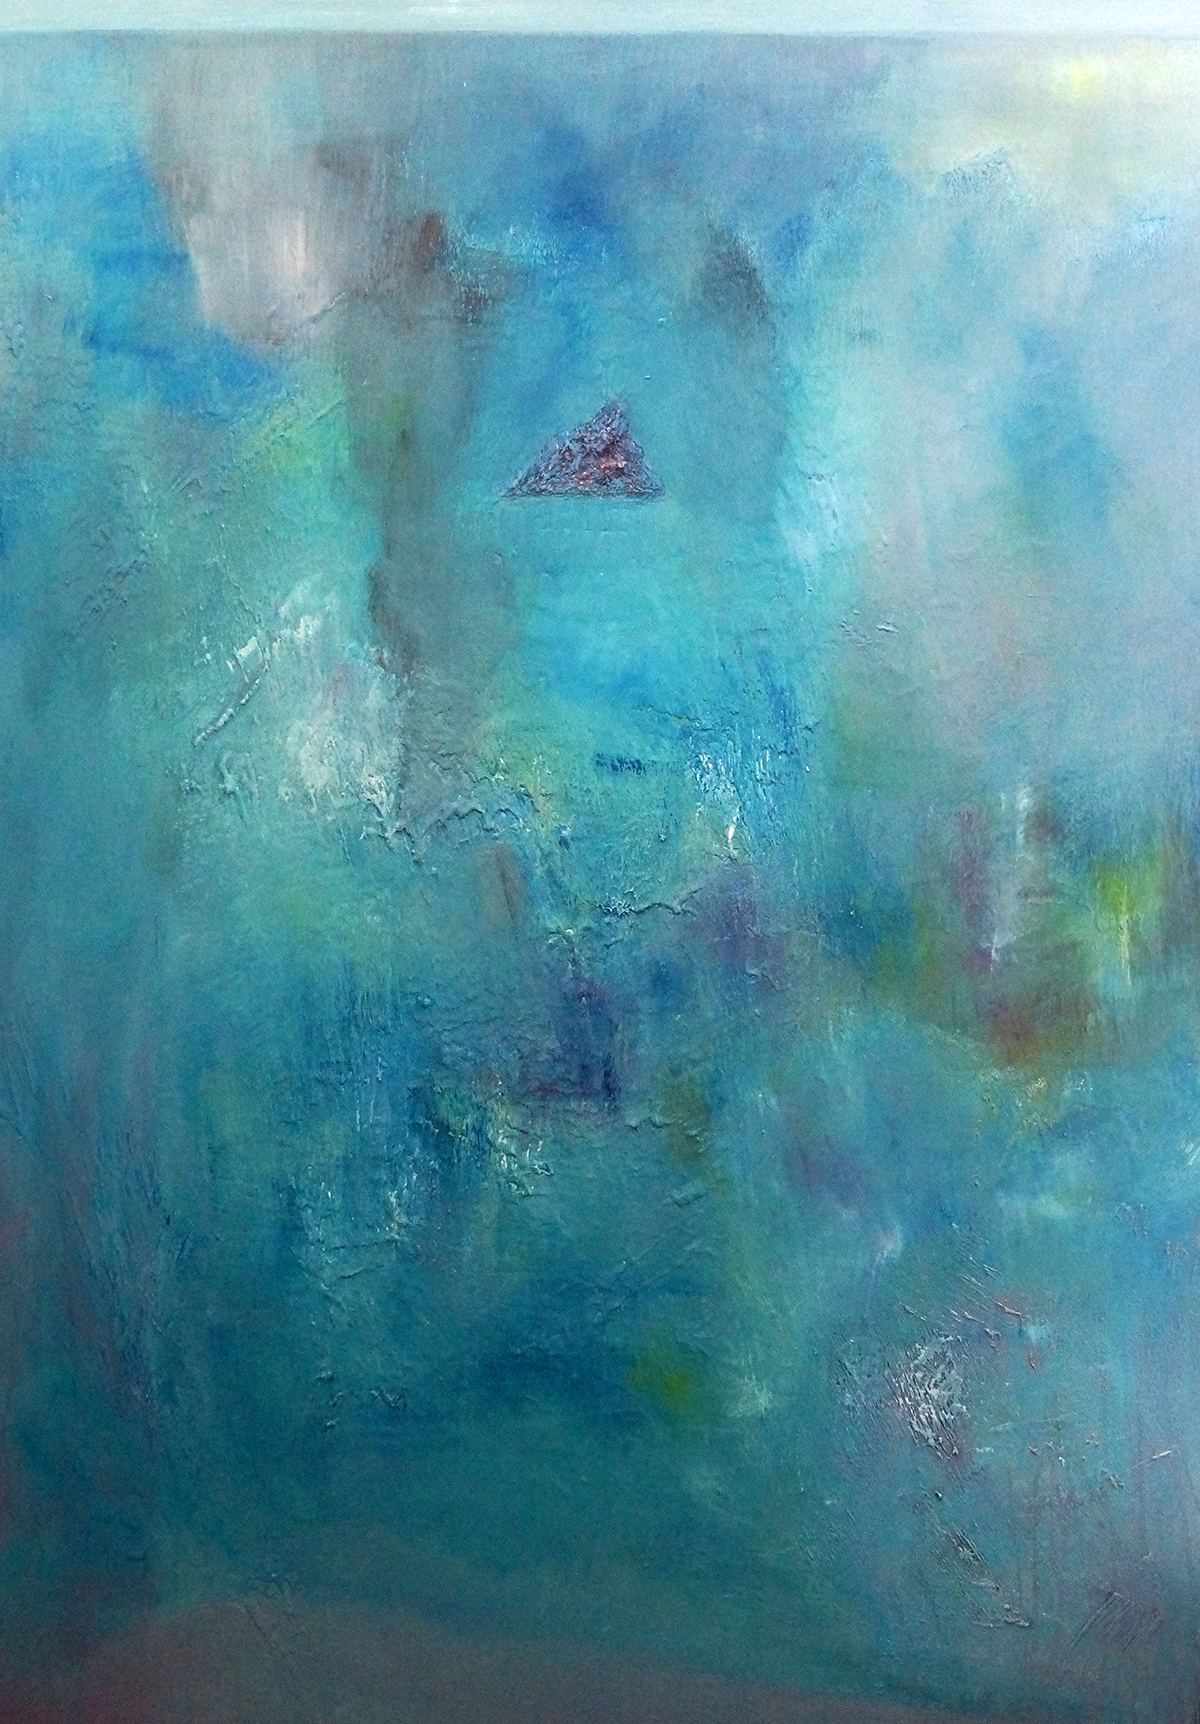 Surrounding Solitude - Oil on Canvas - 122cm x 92cm